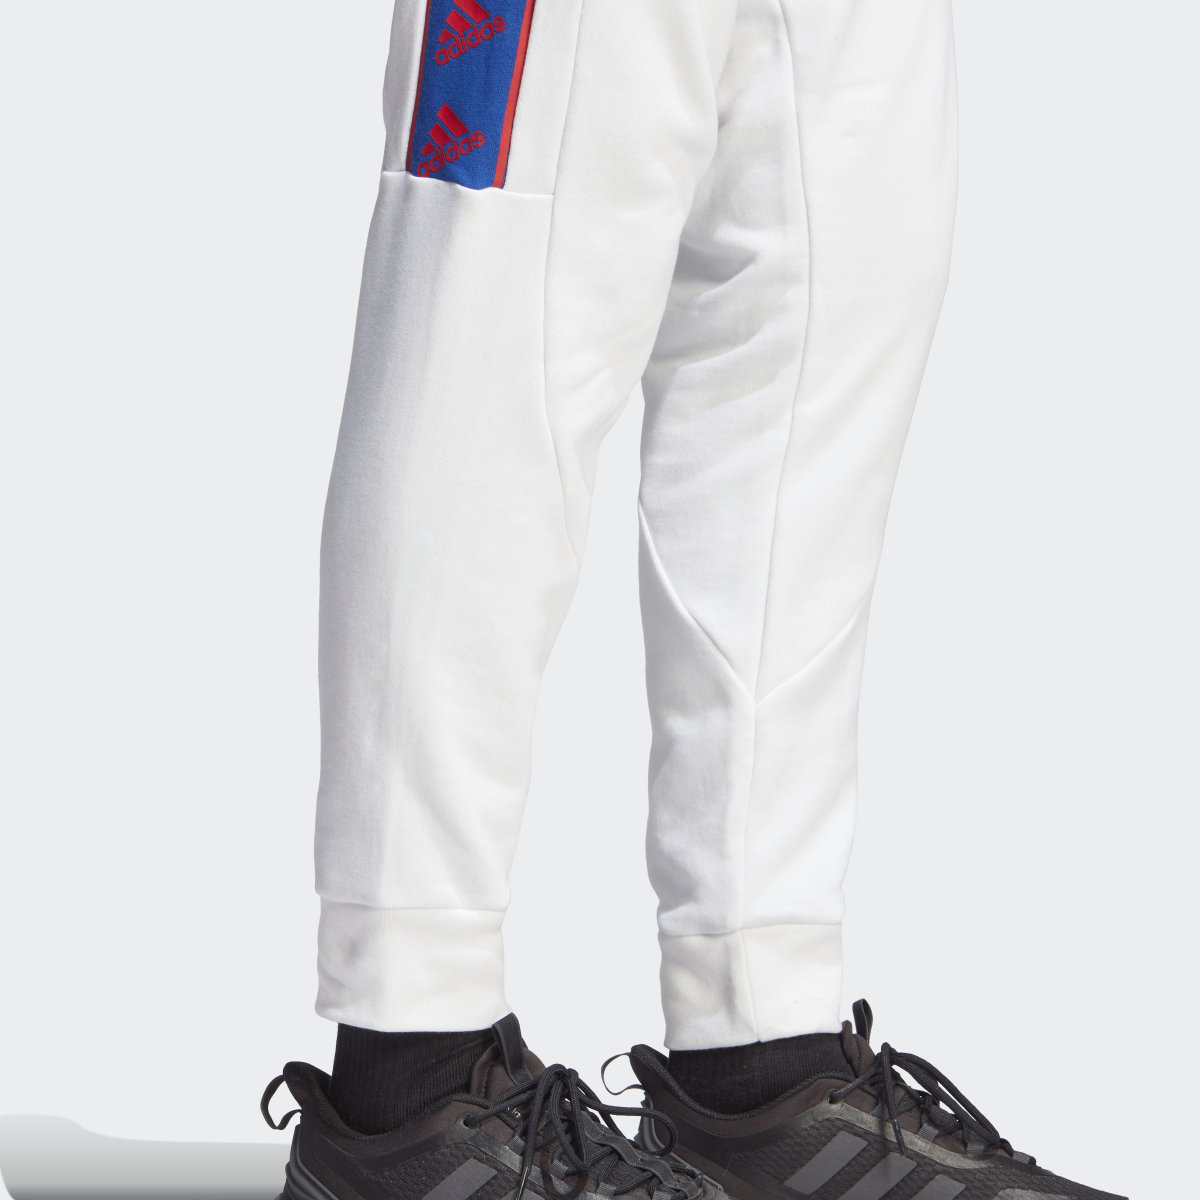 Adidas Brandlove Pants. 6